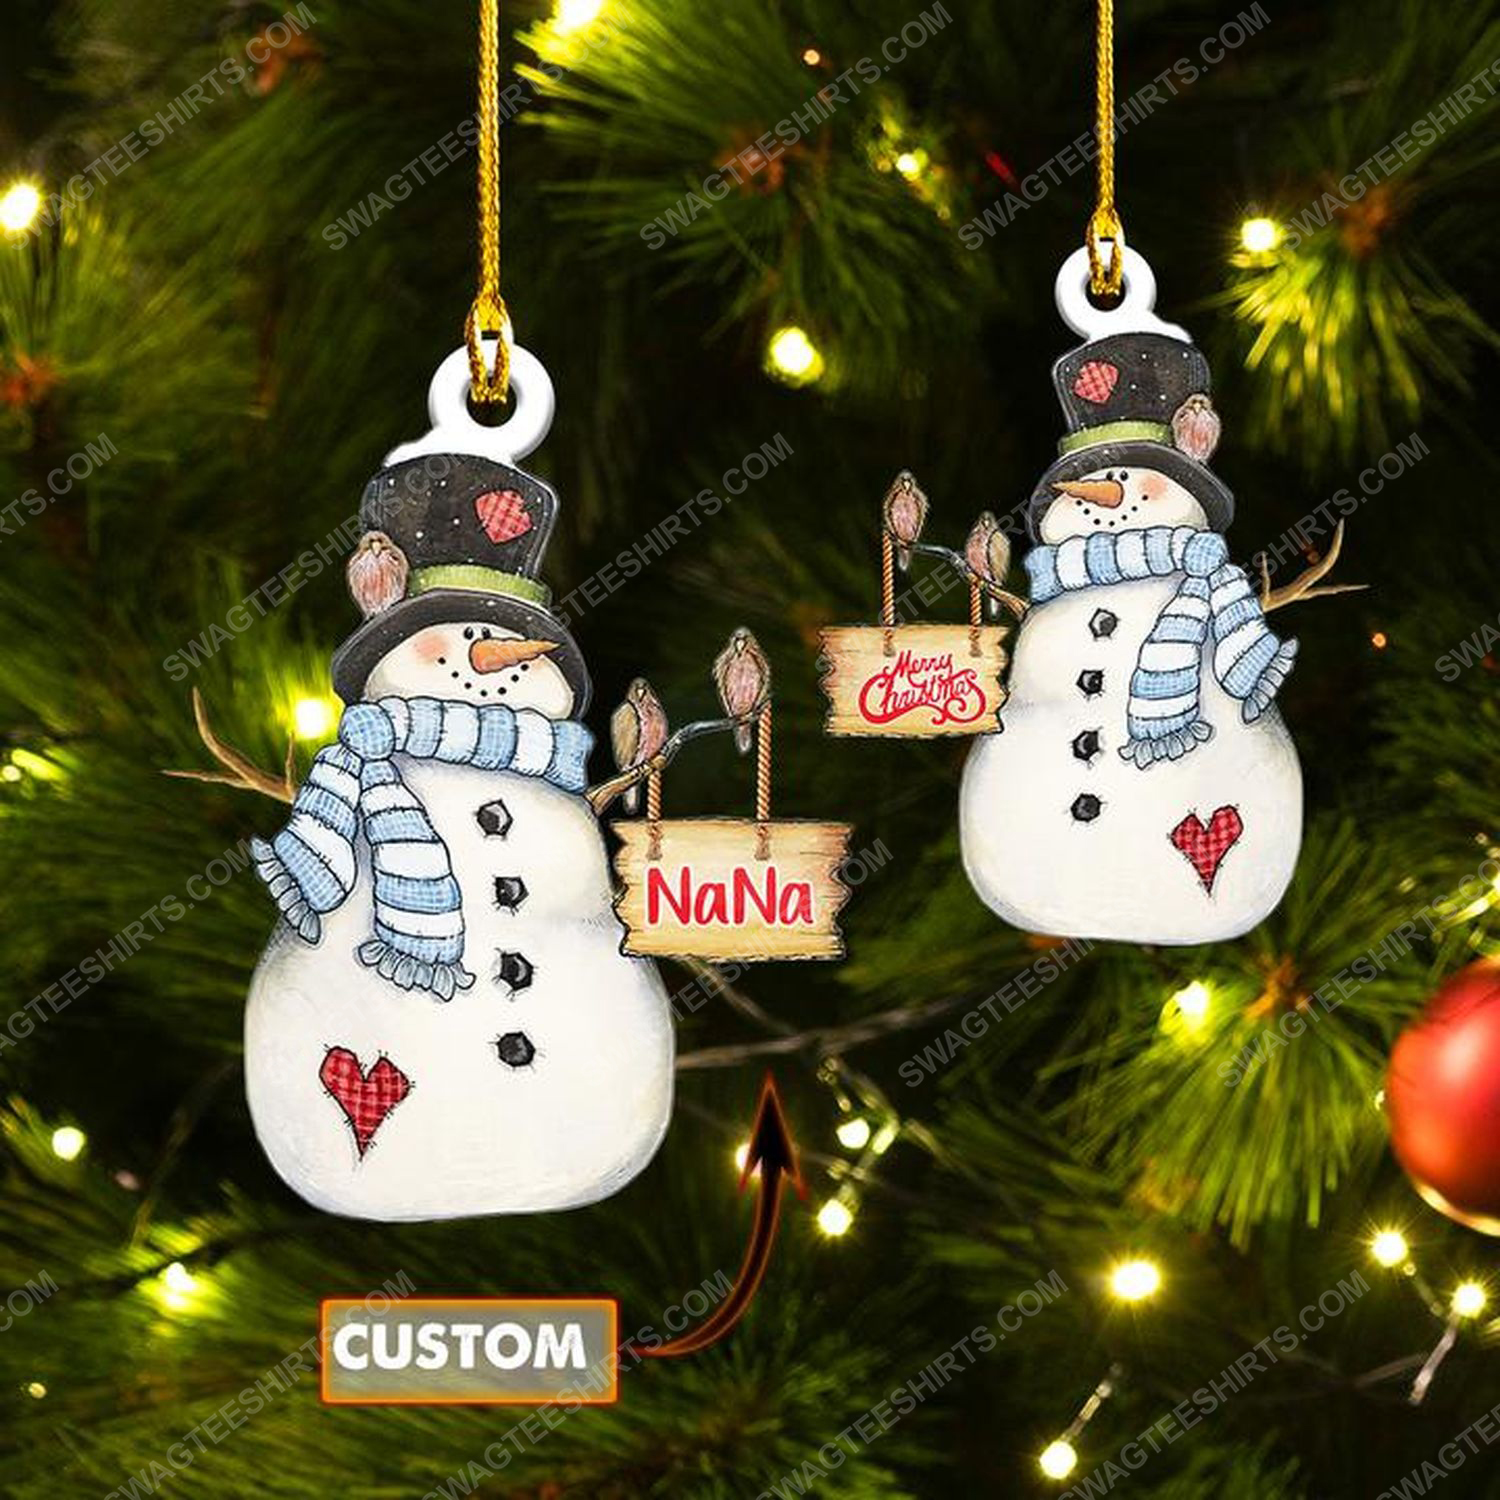 Custom snowman christmas gift ornament 1 - Copy (3)